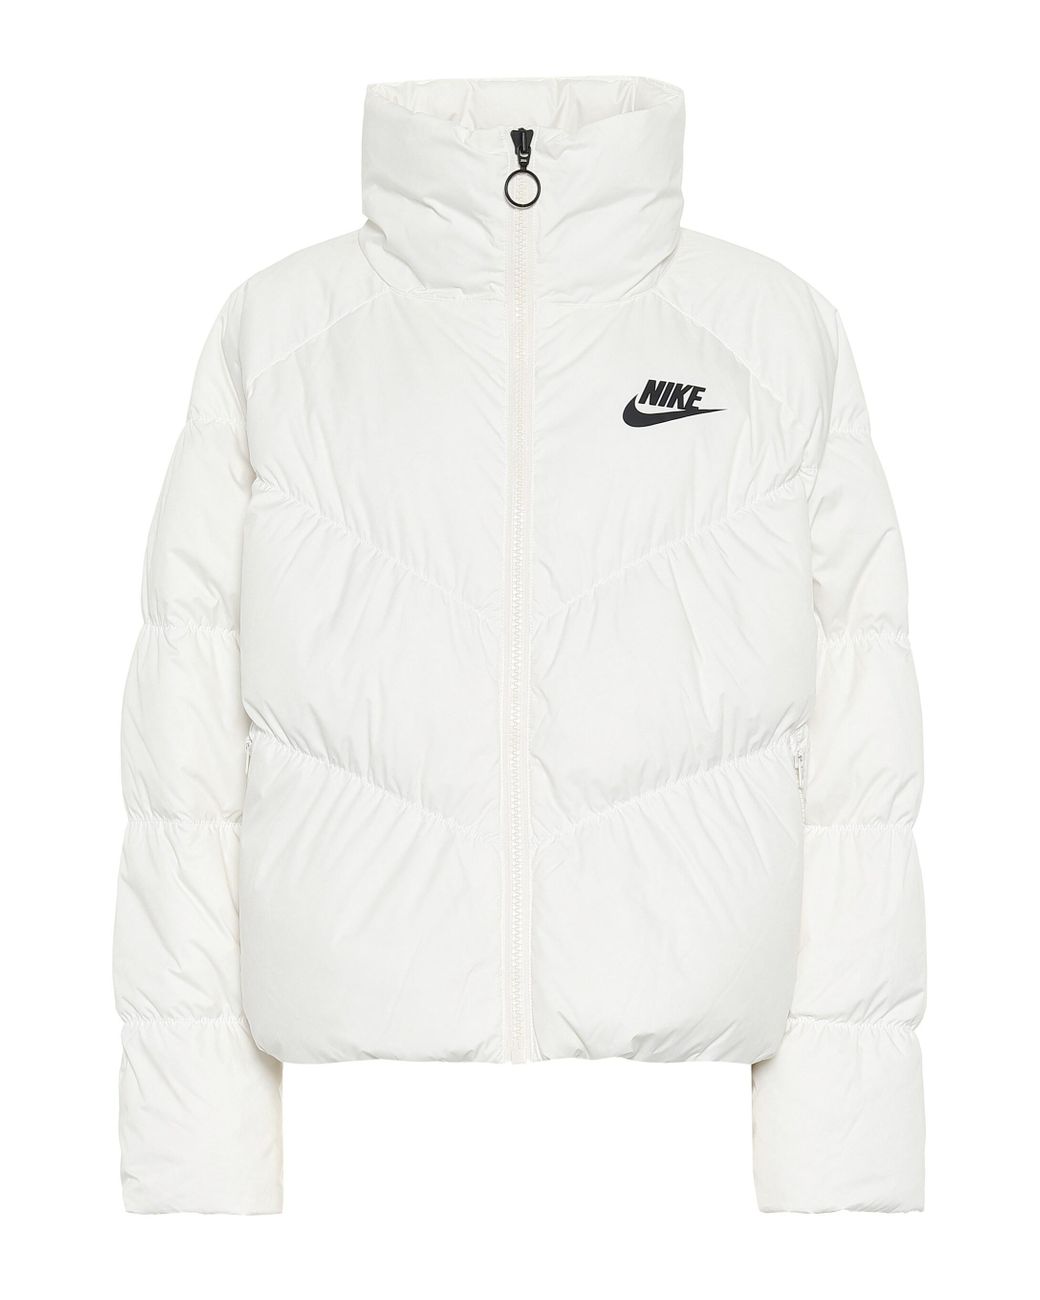 Nike Down Jacket in White - Lyst